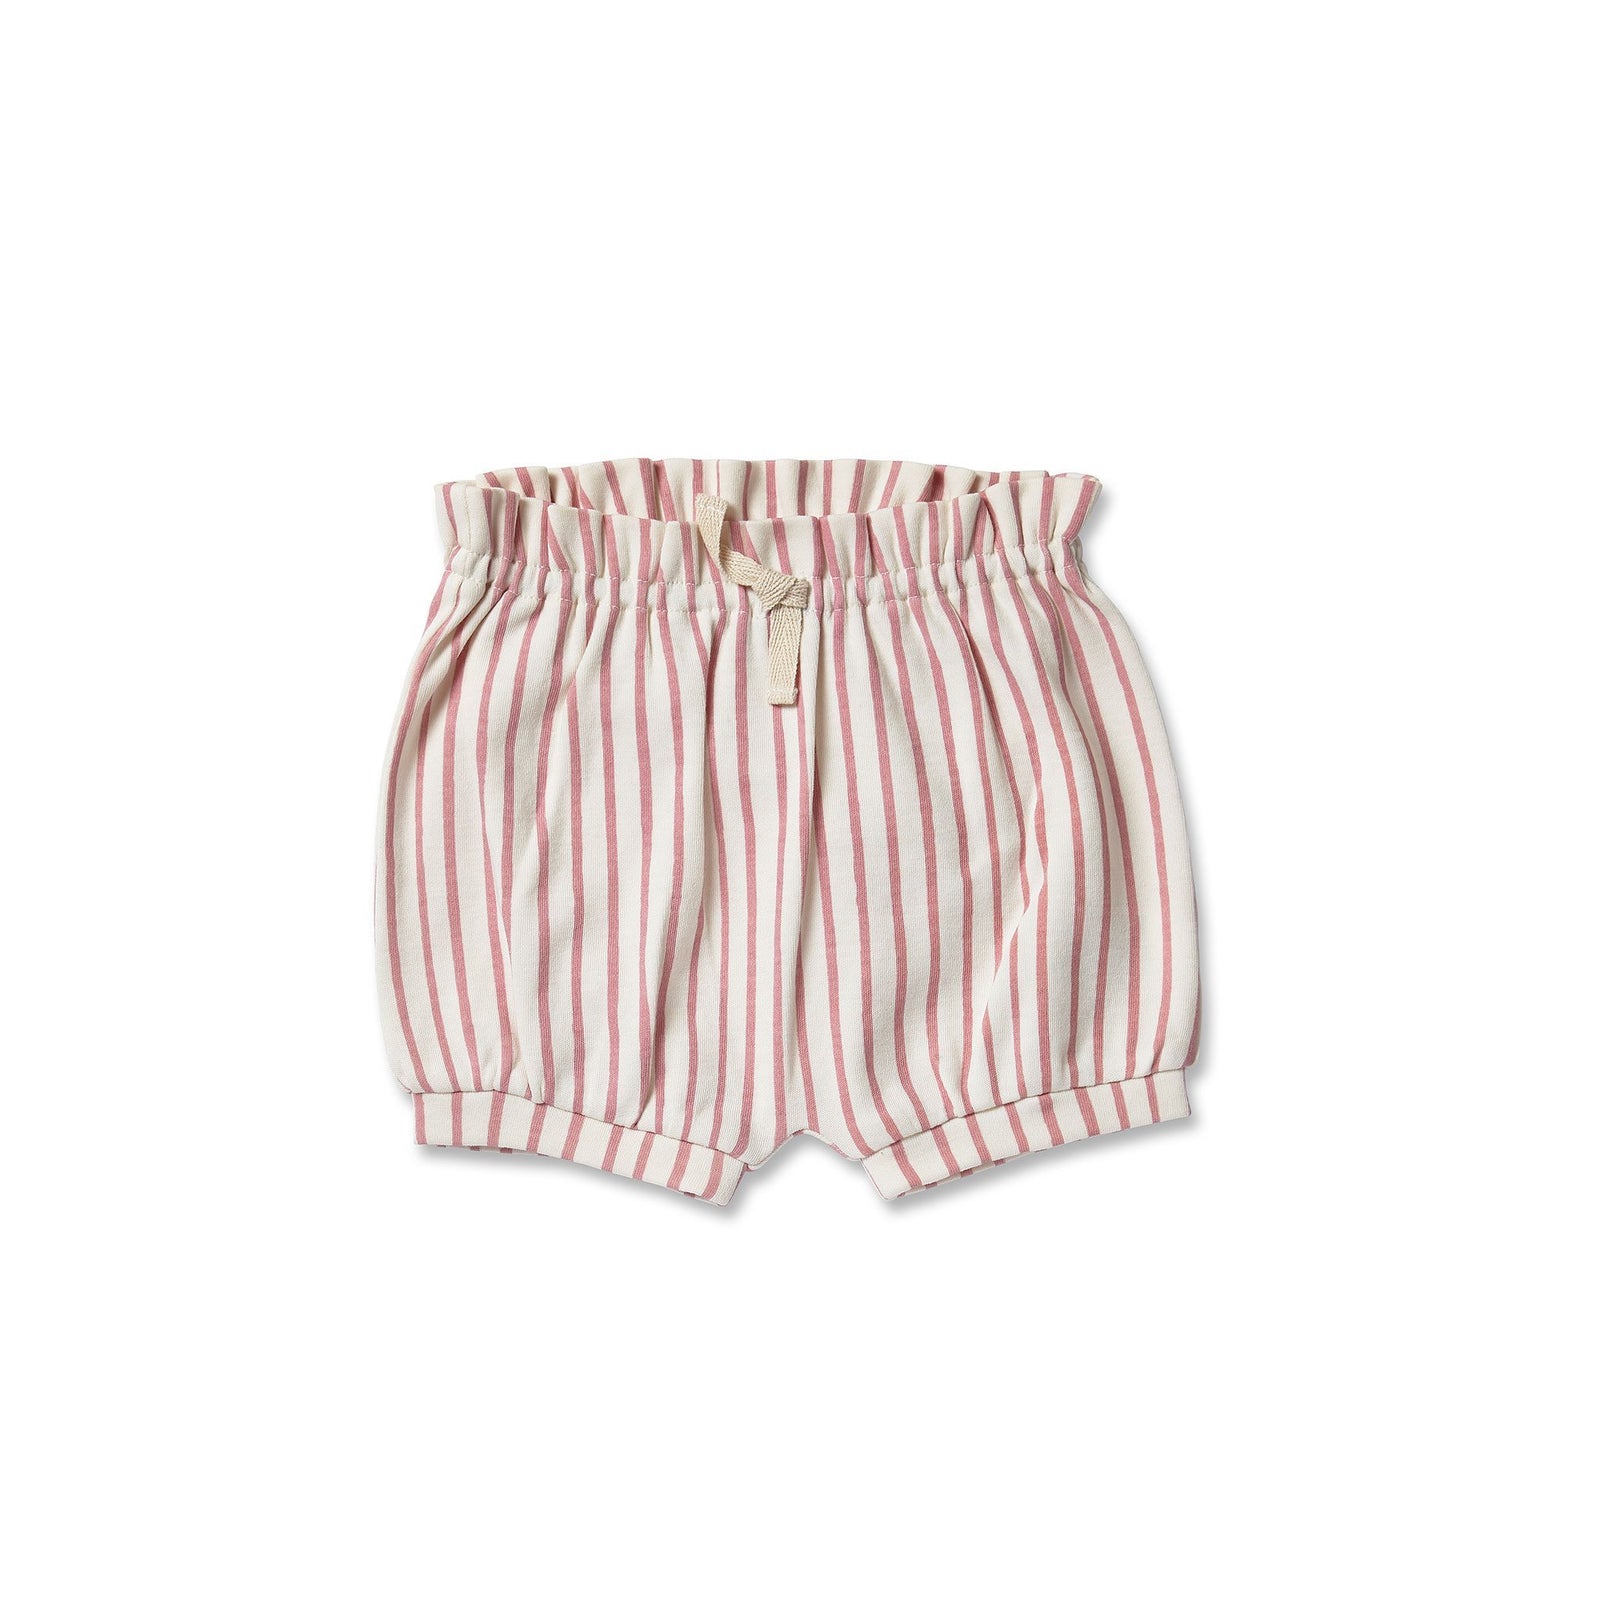 Pehr Stripes Away Bloomers Dark Pink Bloomers & Shorts. Organic. White with dark pink stripes.